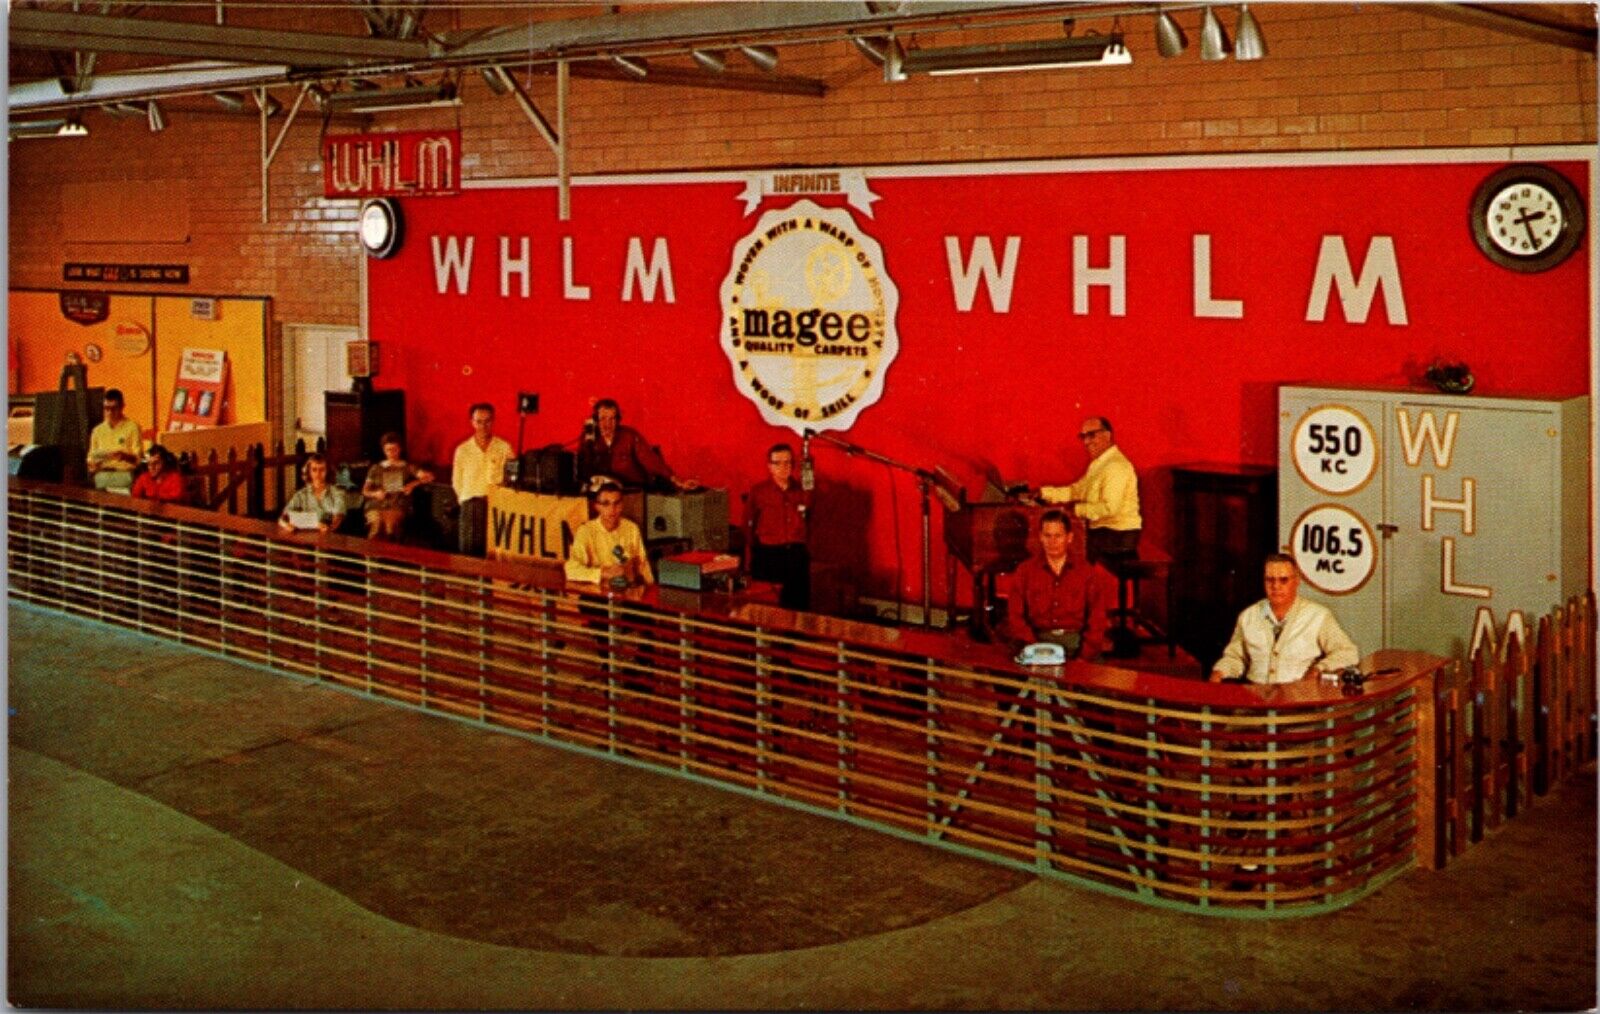 PC WHLM Radio at the Bloomsburg Fair Serves 12 Central Pennsylvania Counties